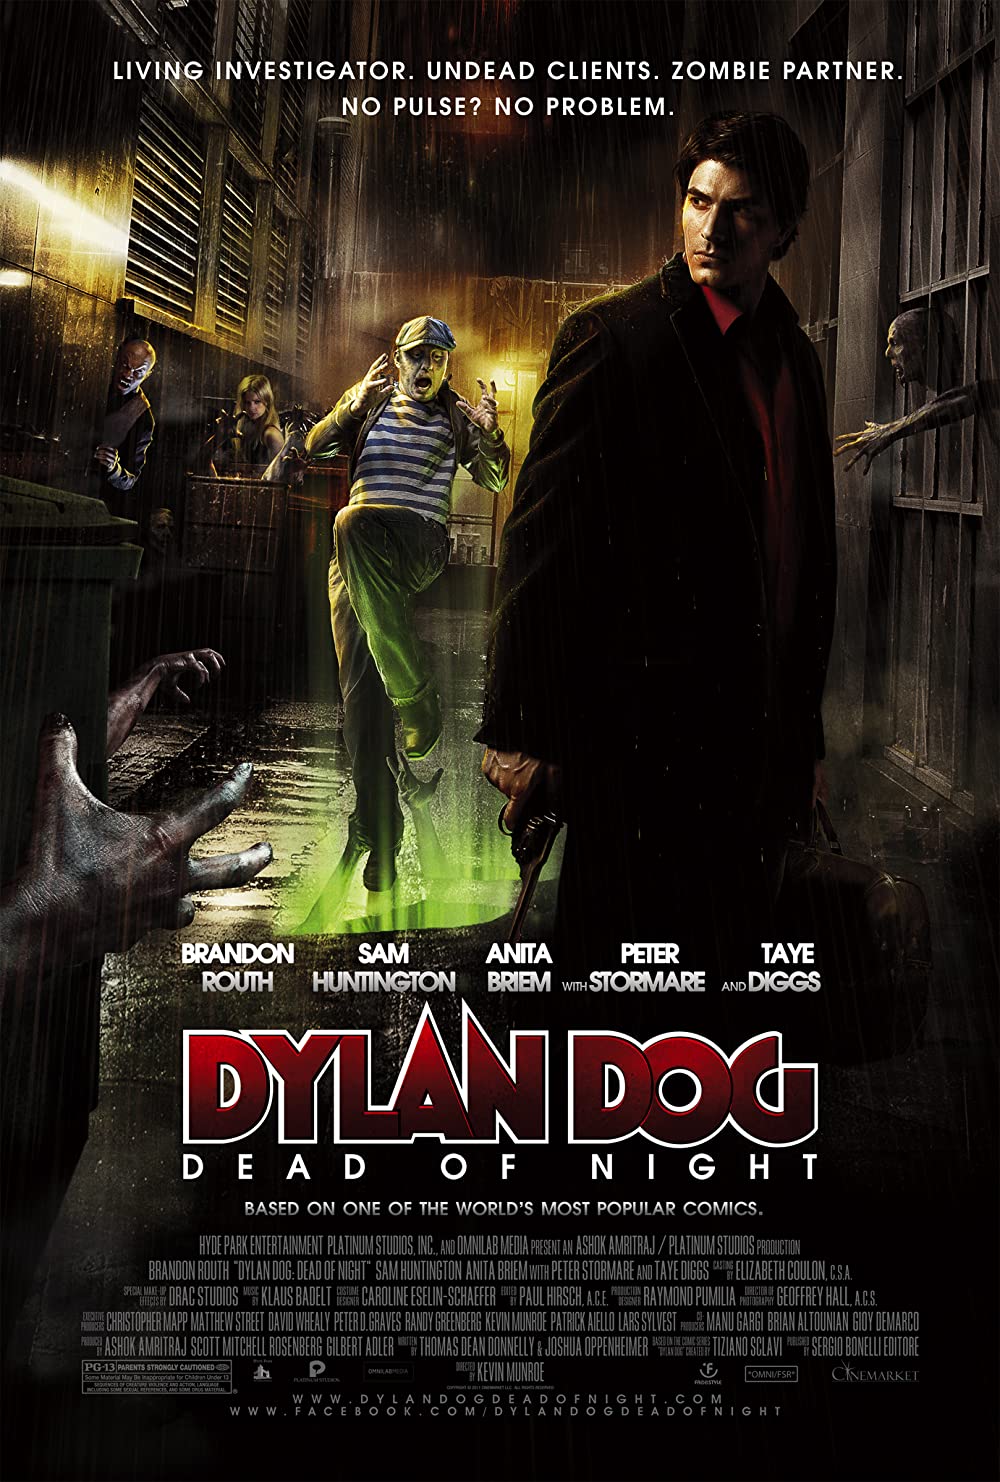 Dylan Dog: Dead of Night ฮีโร่รัตติกาล ถล่มมารหมู่อสูร (2010)